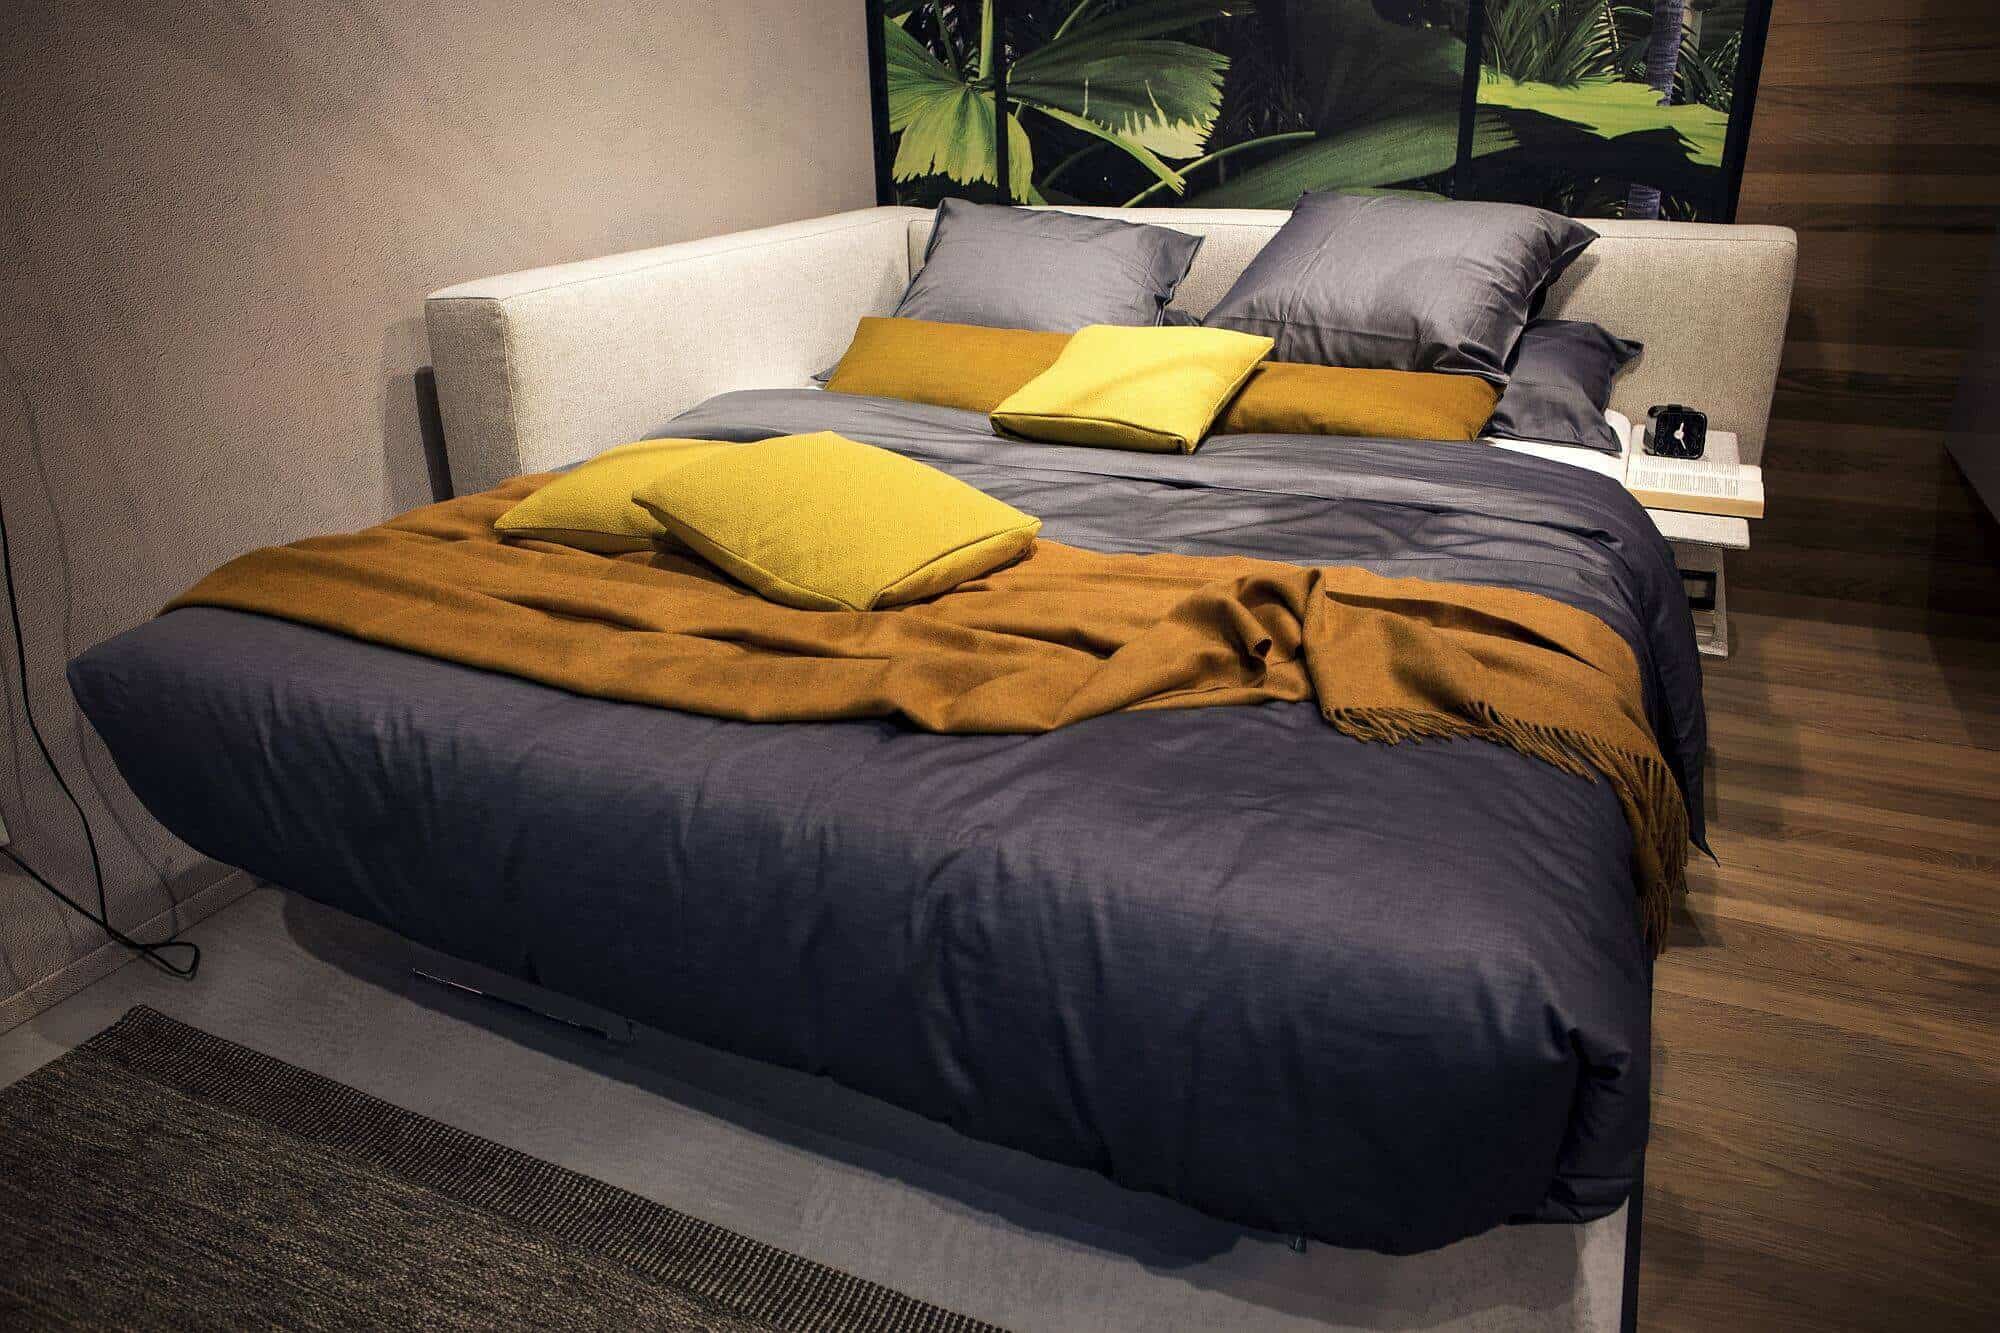 Arrange Pillow on a Bed